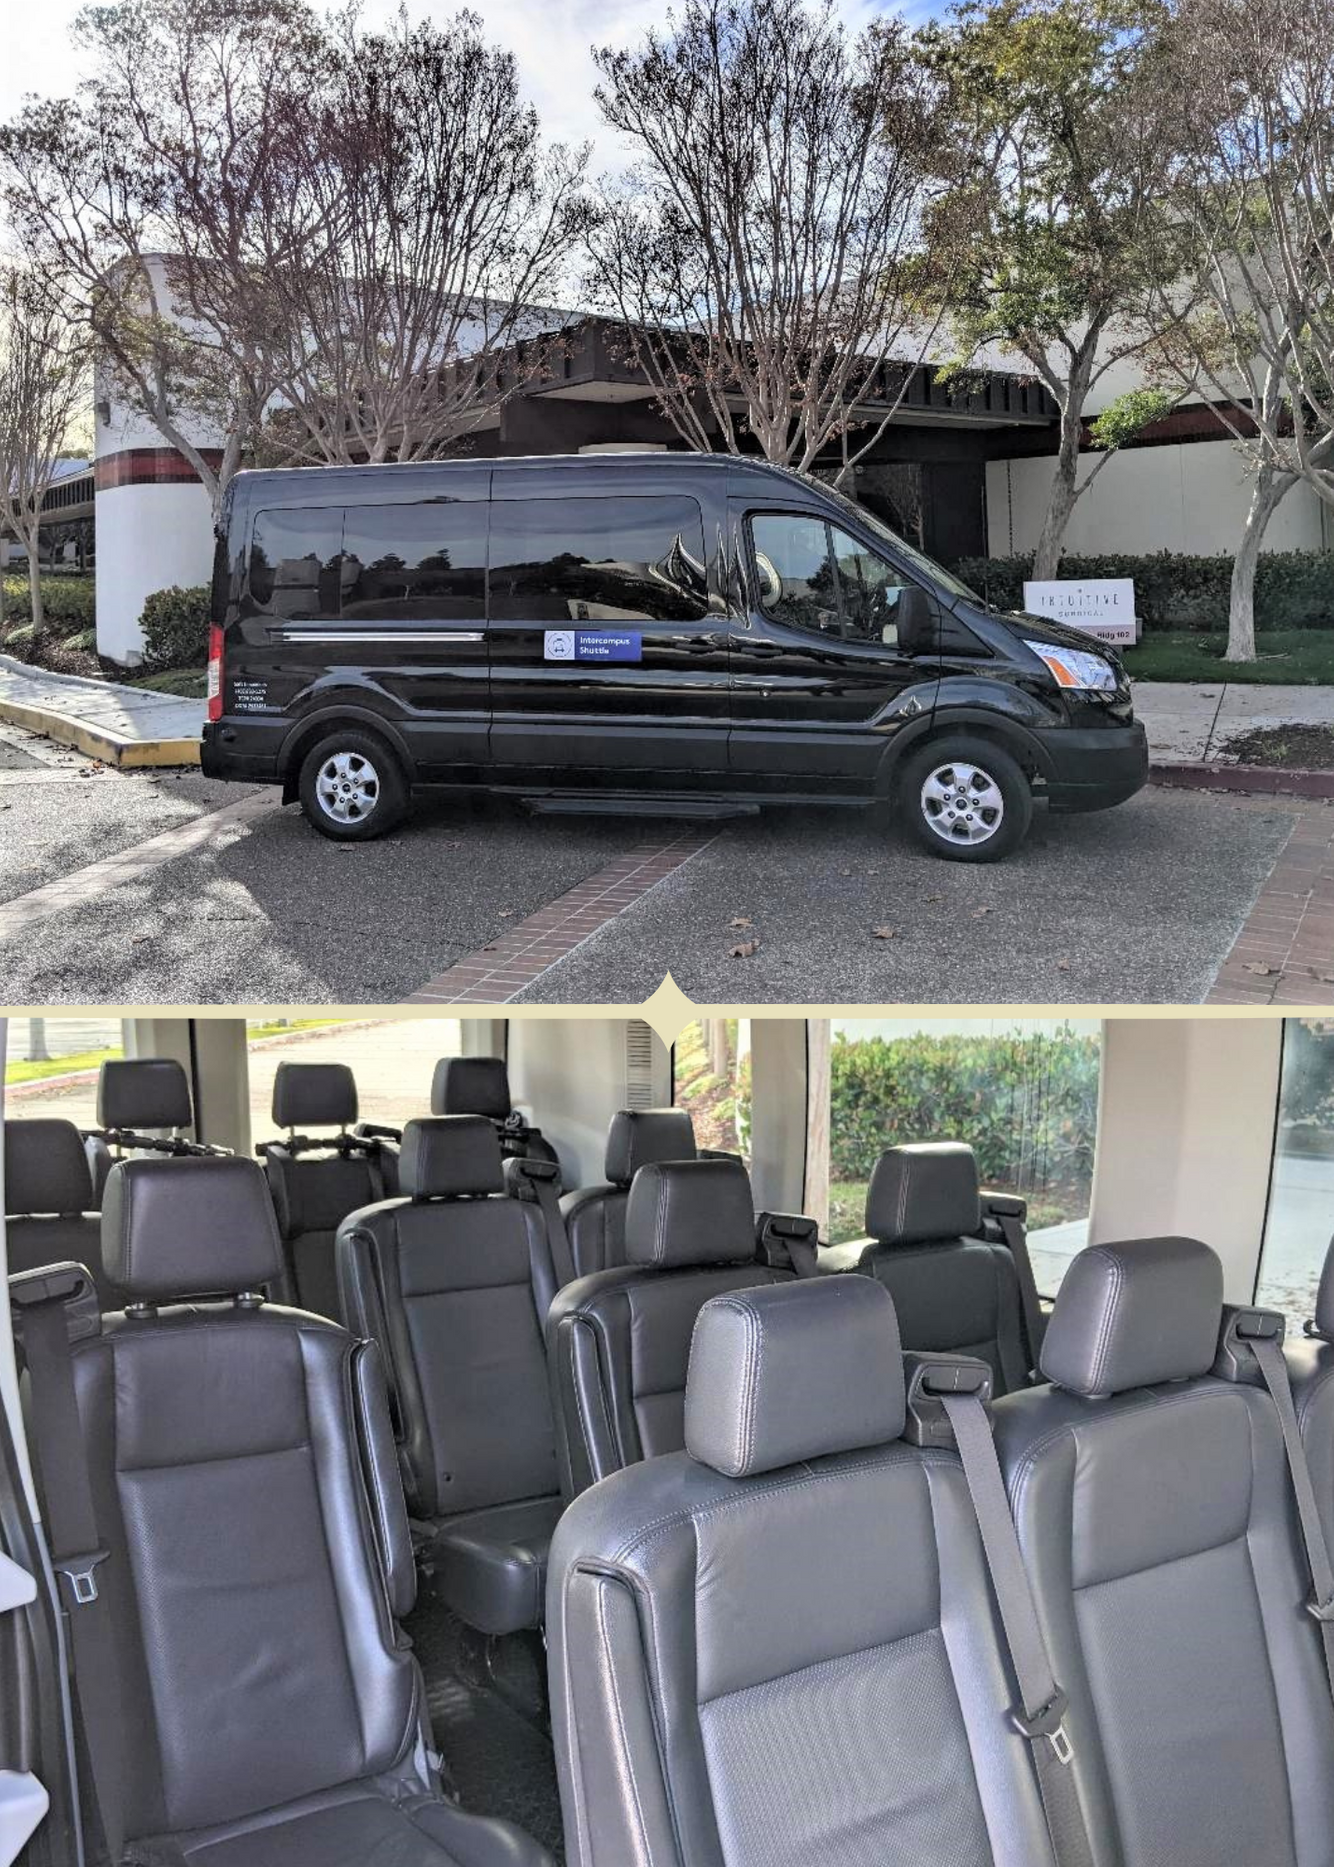 Ford Transit Executive Sprinter Van - Black 14 Passenger.png